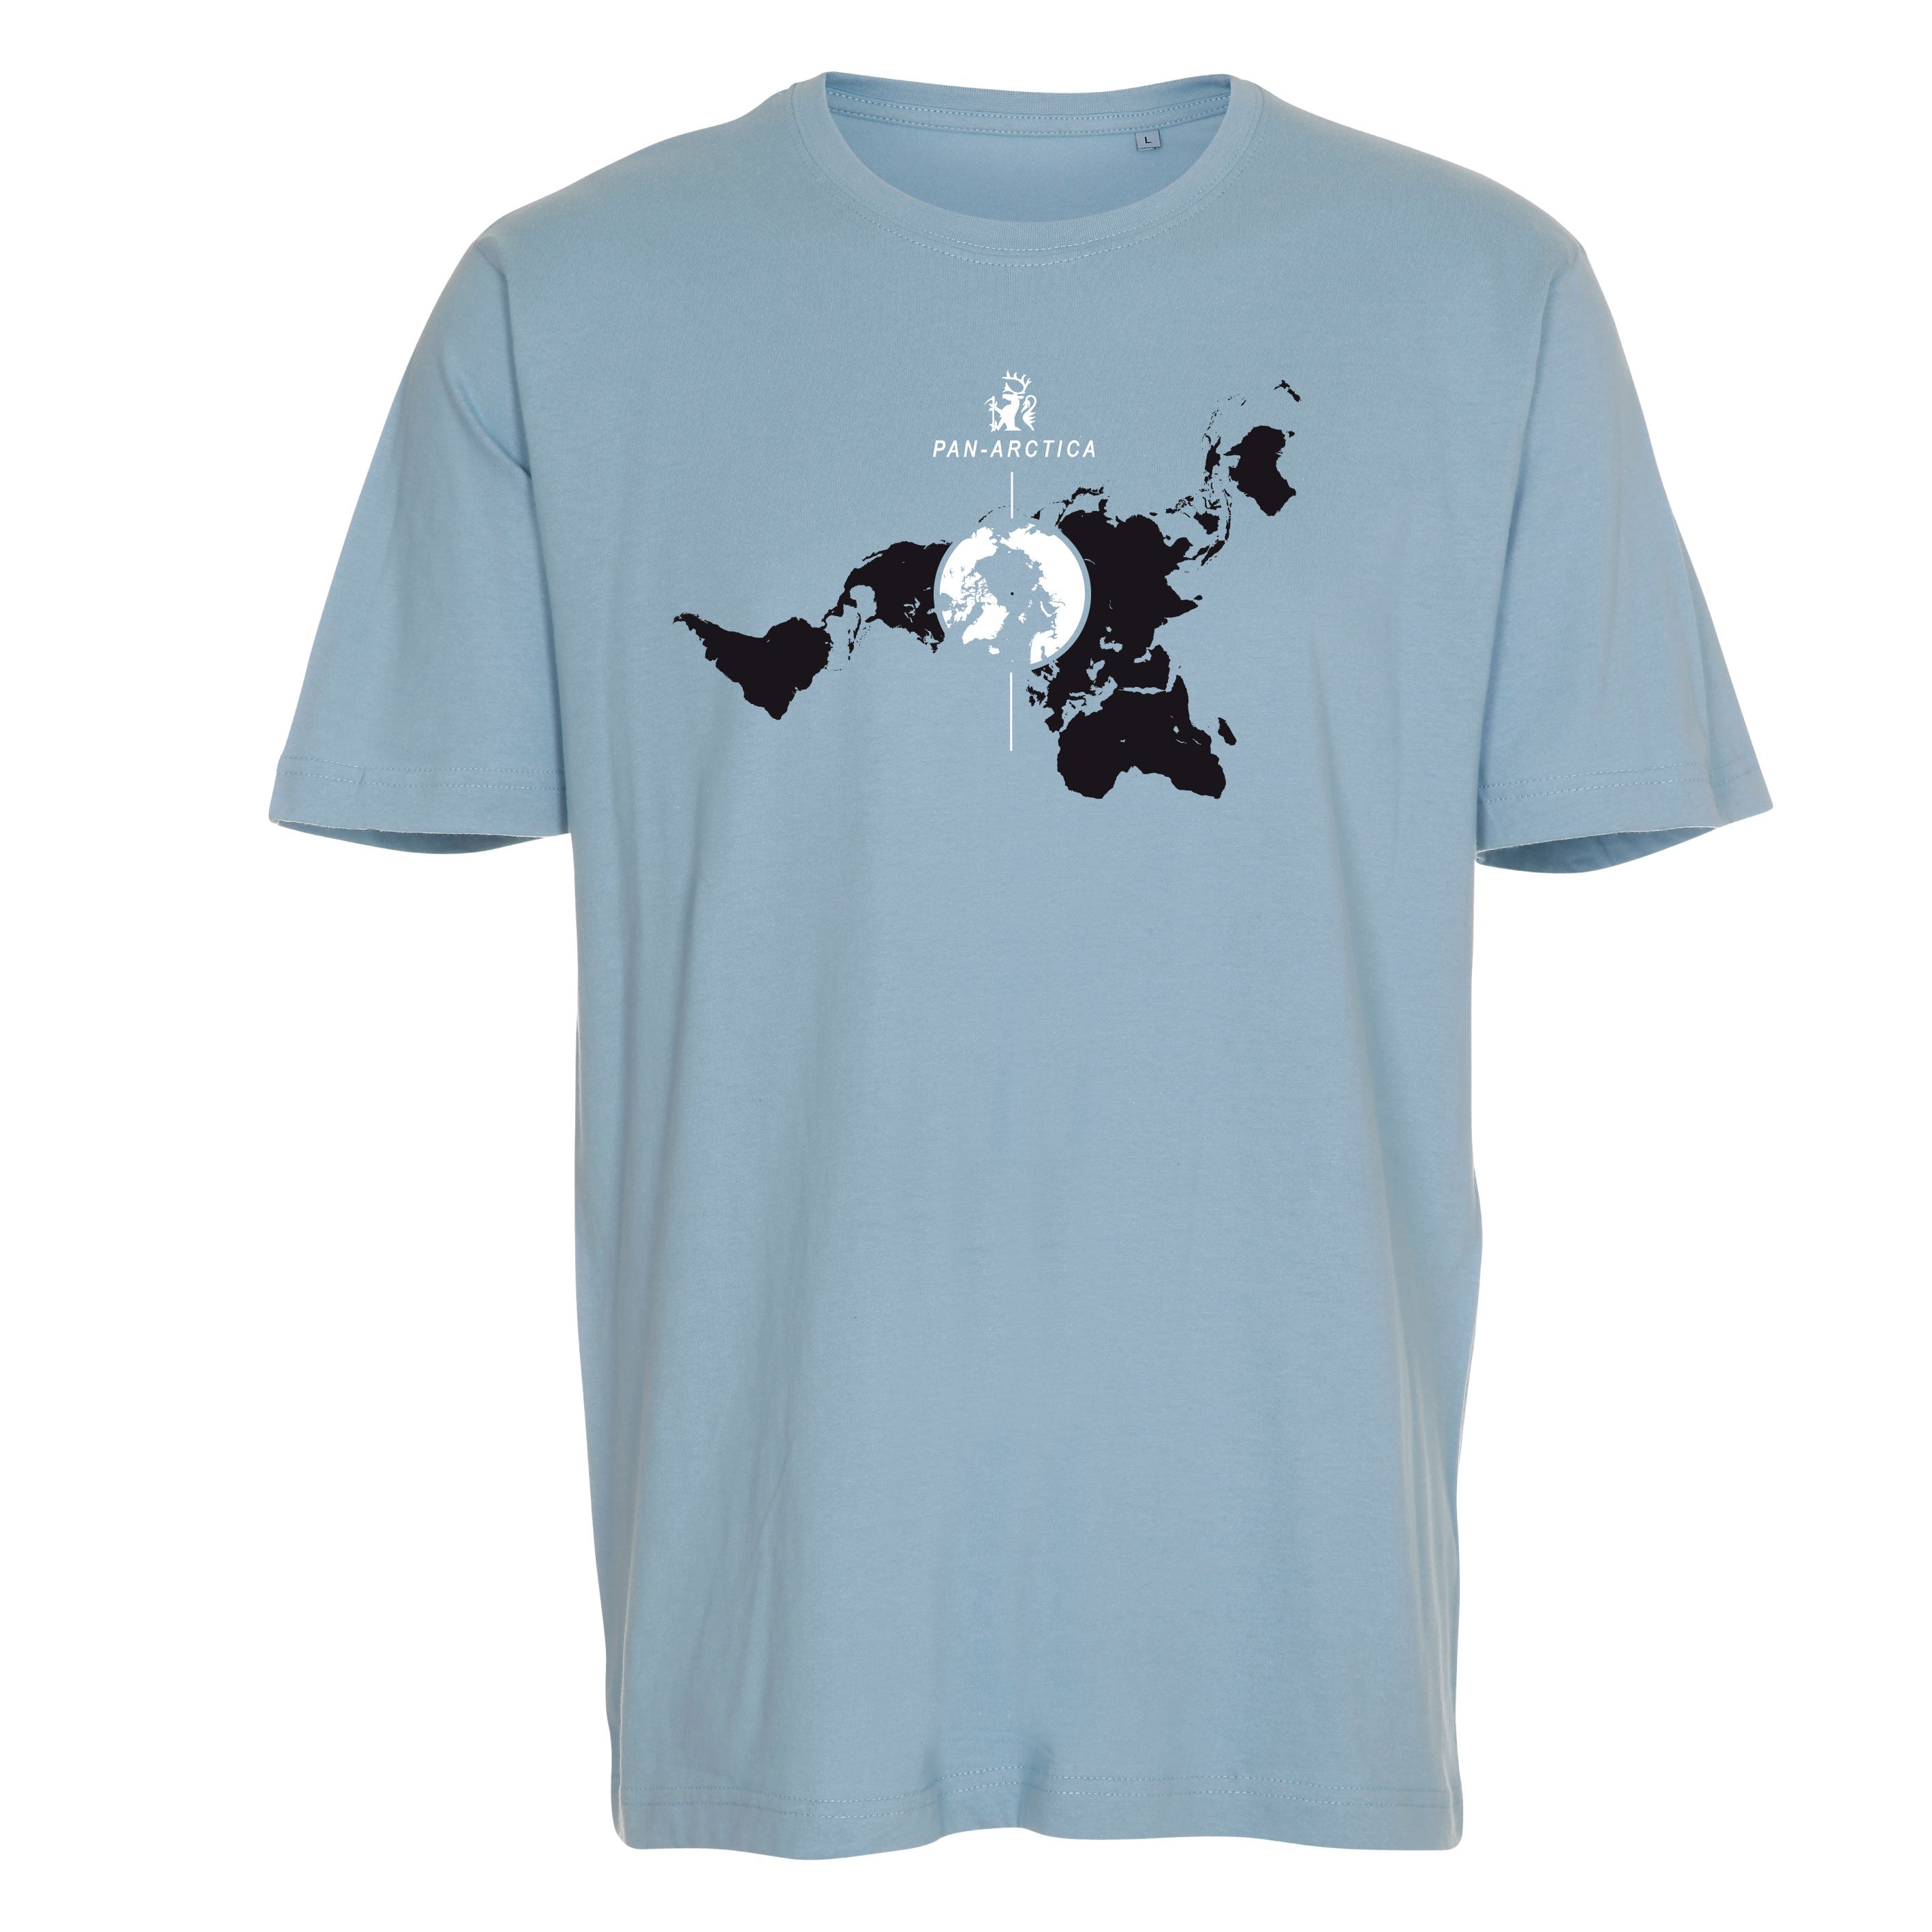 NORDTING - T-skjorte - sky blue - Pan-Arctica